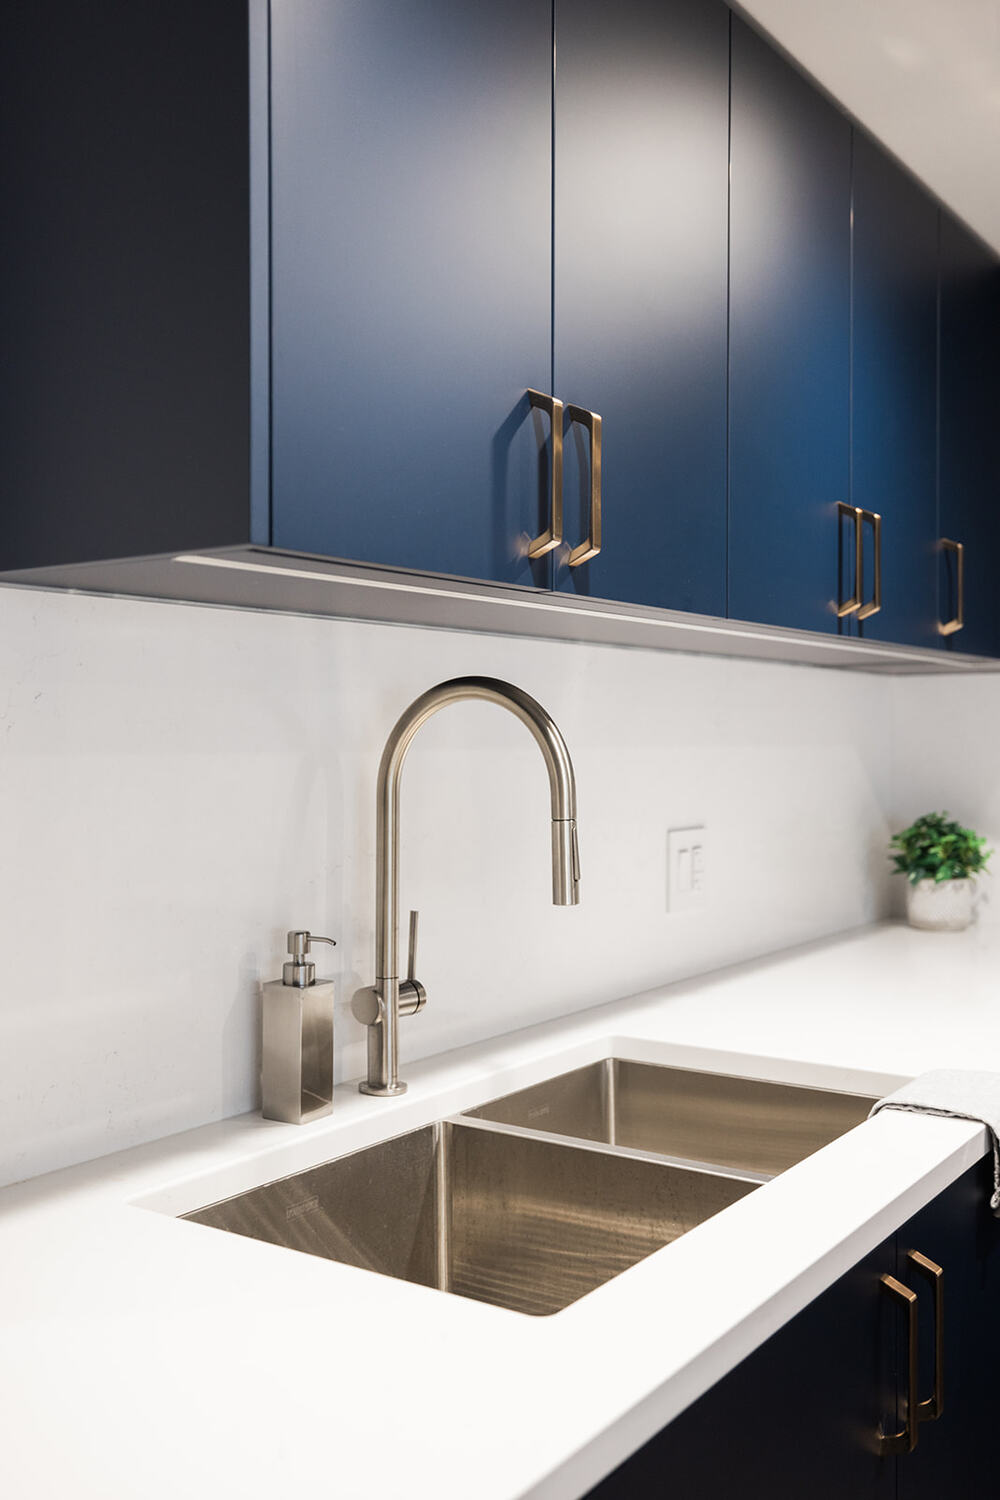 Custom under mount sink in luxury condo kitchen renovation in downtown Toronto